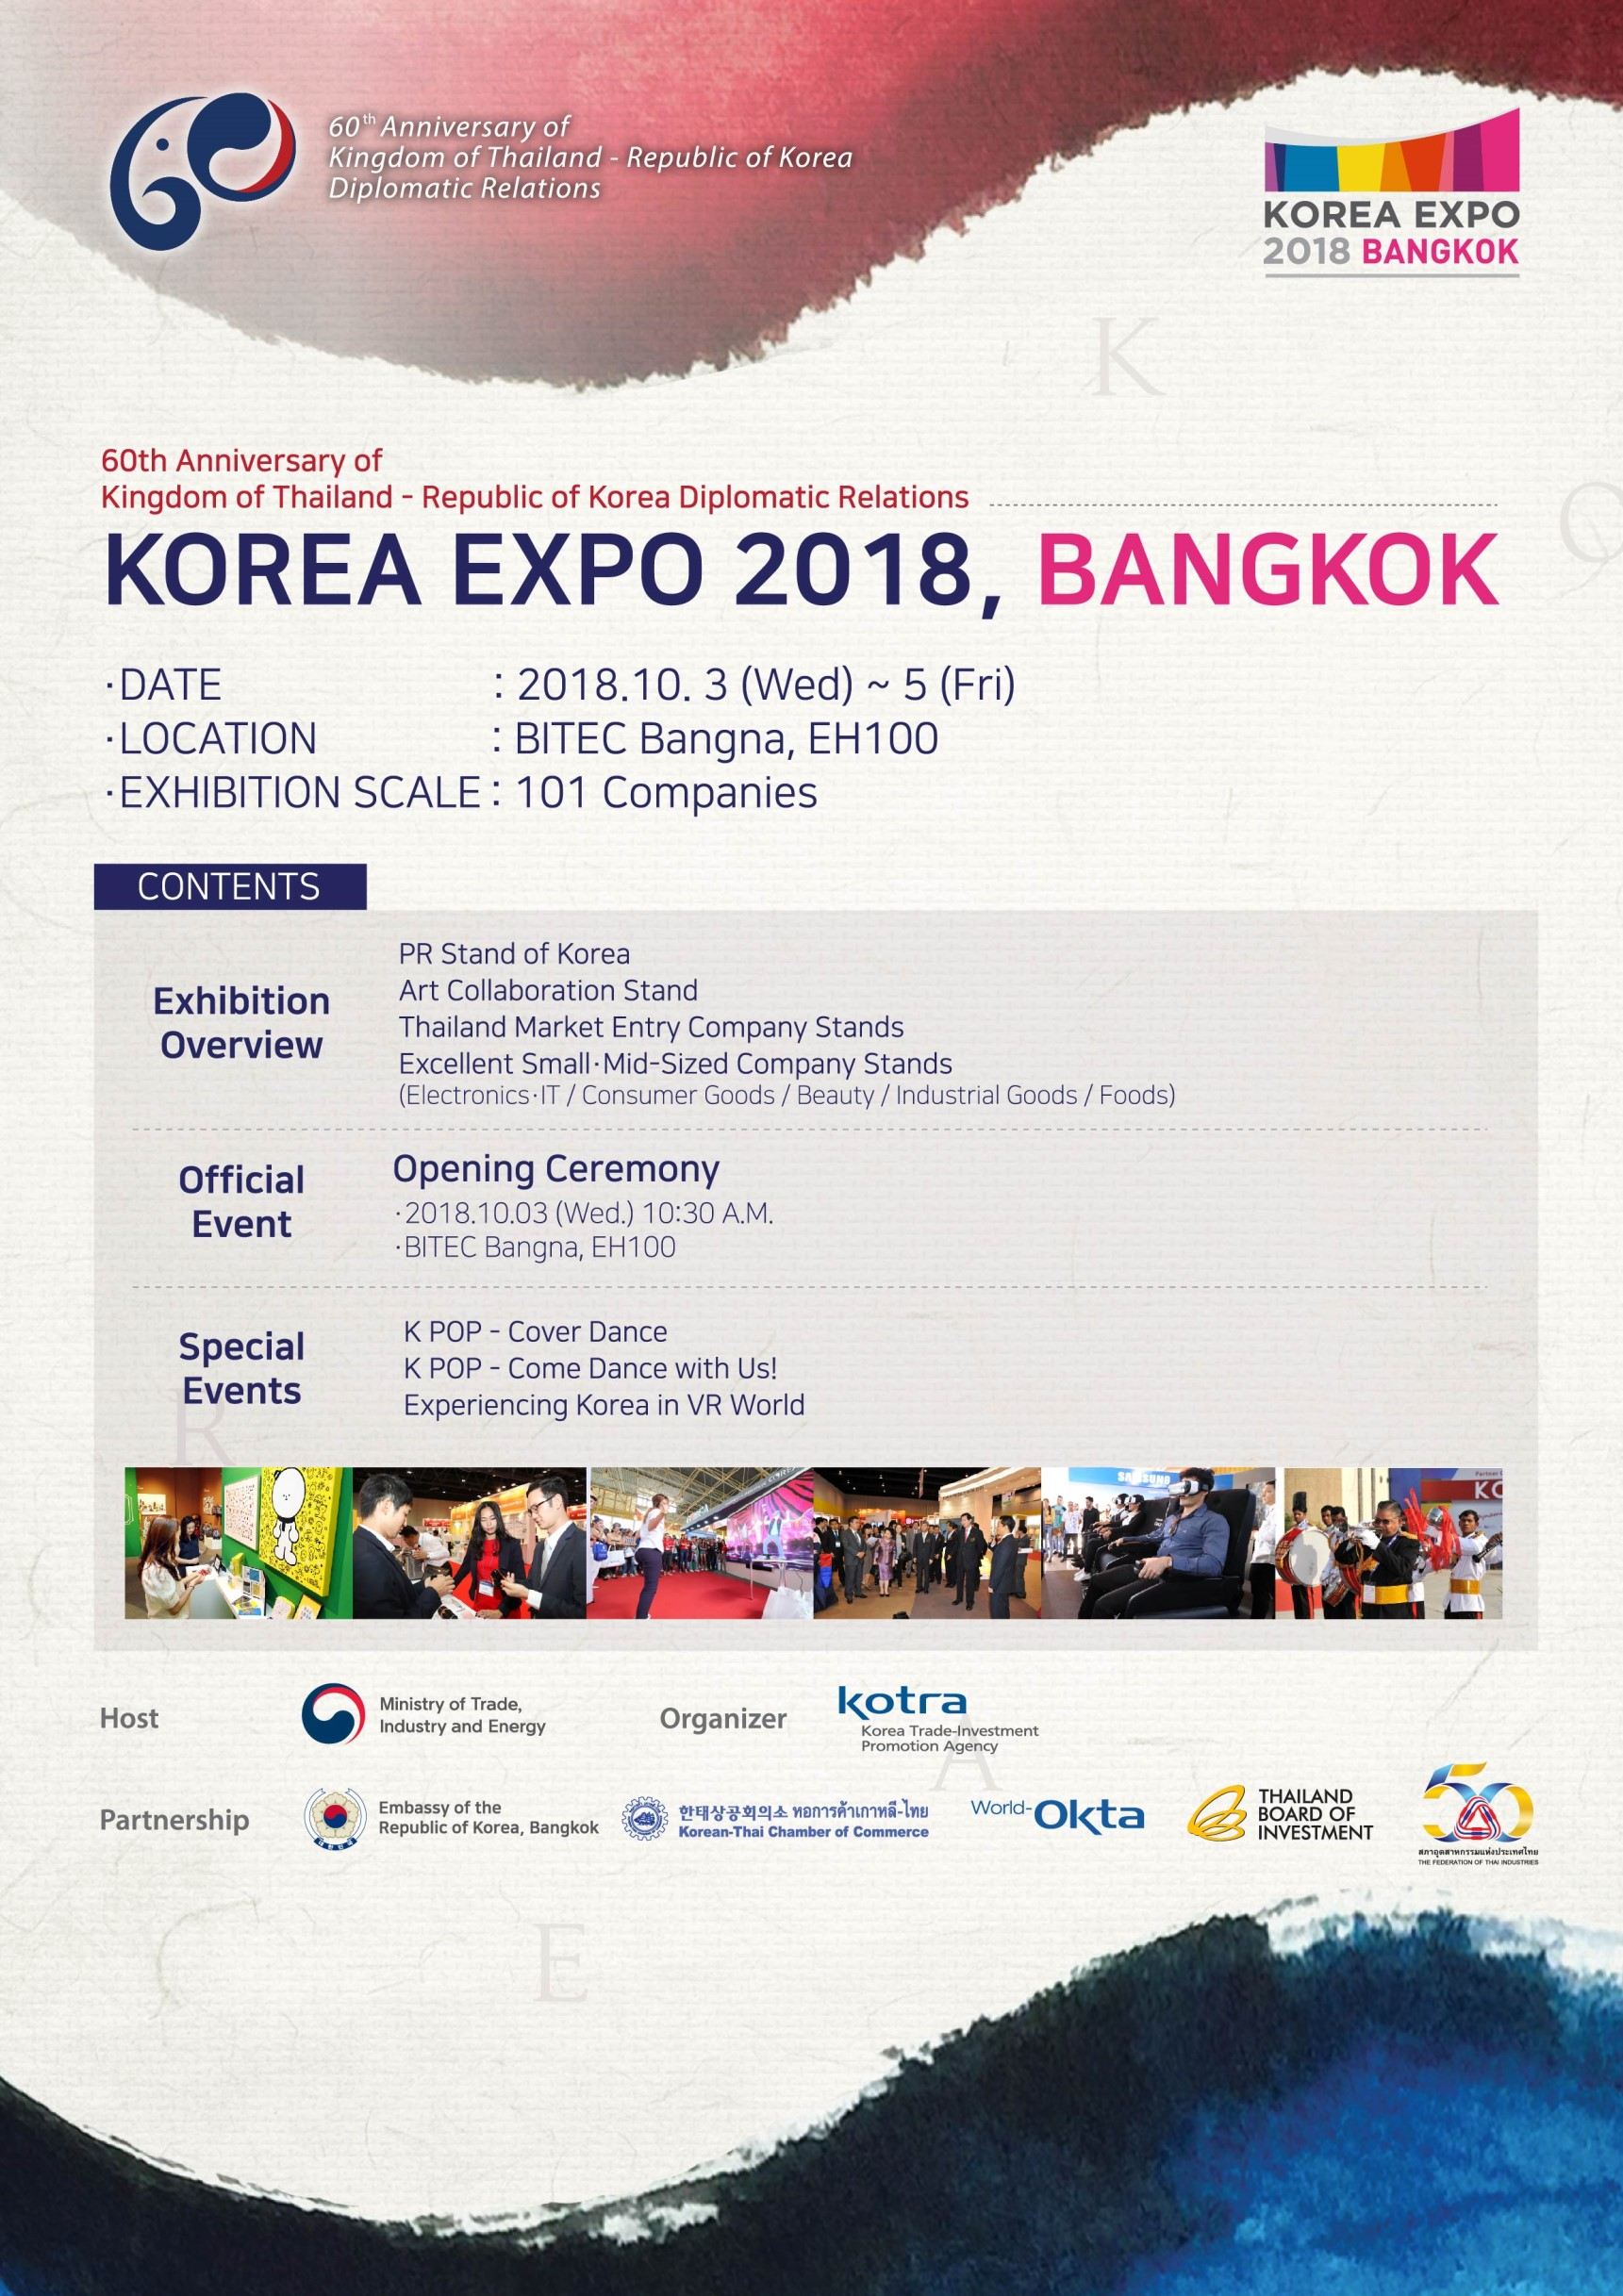 Korea Expo 2018